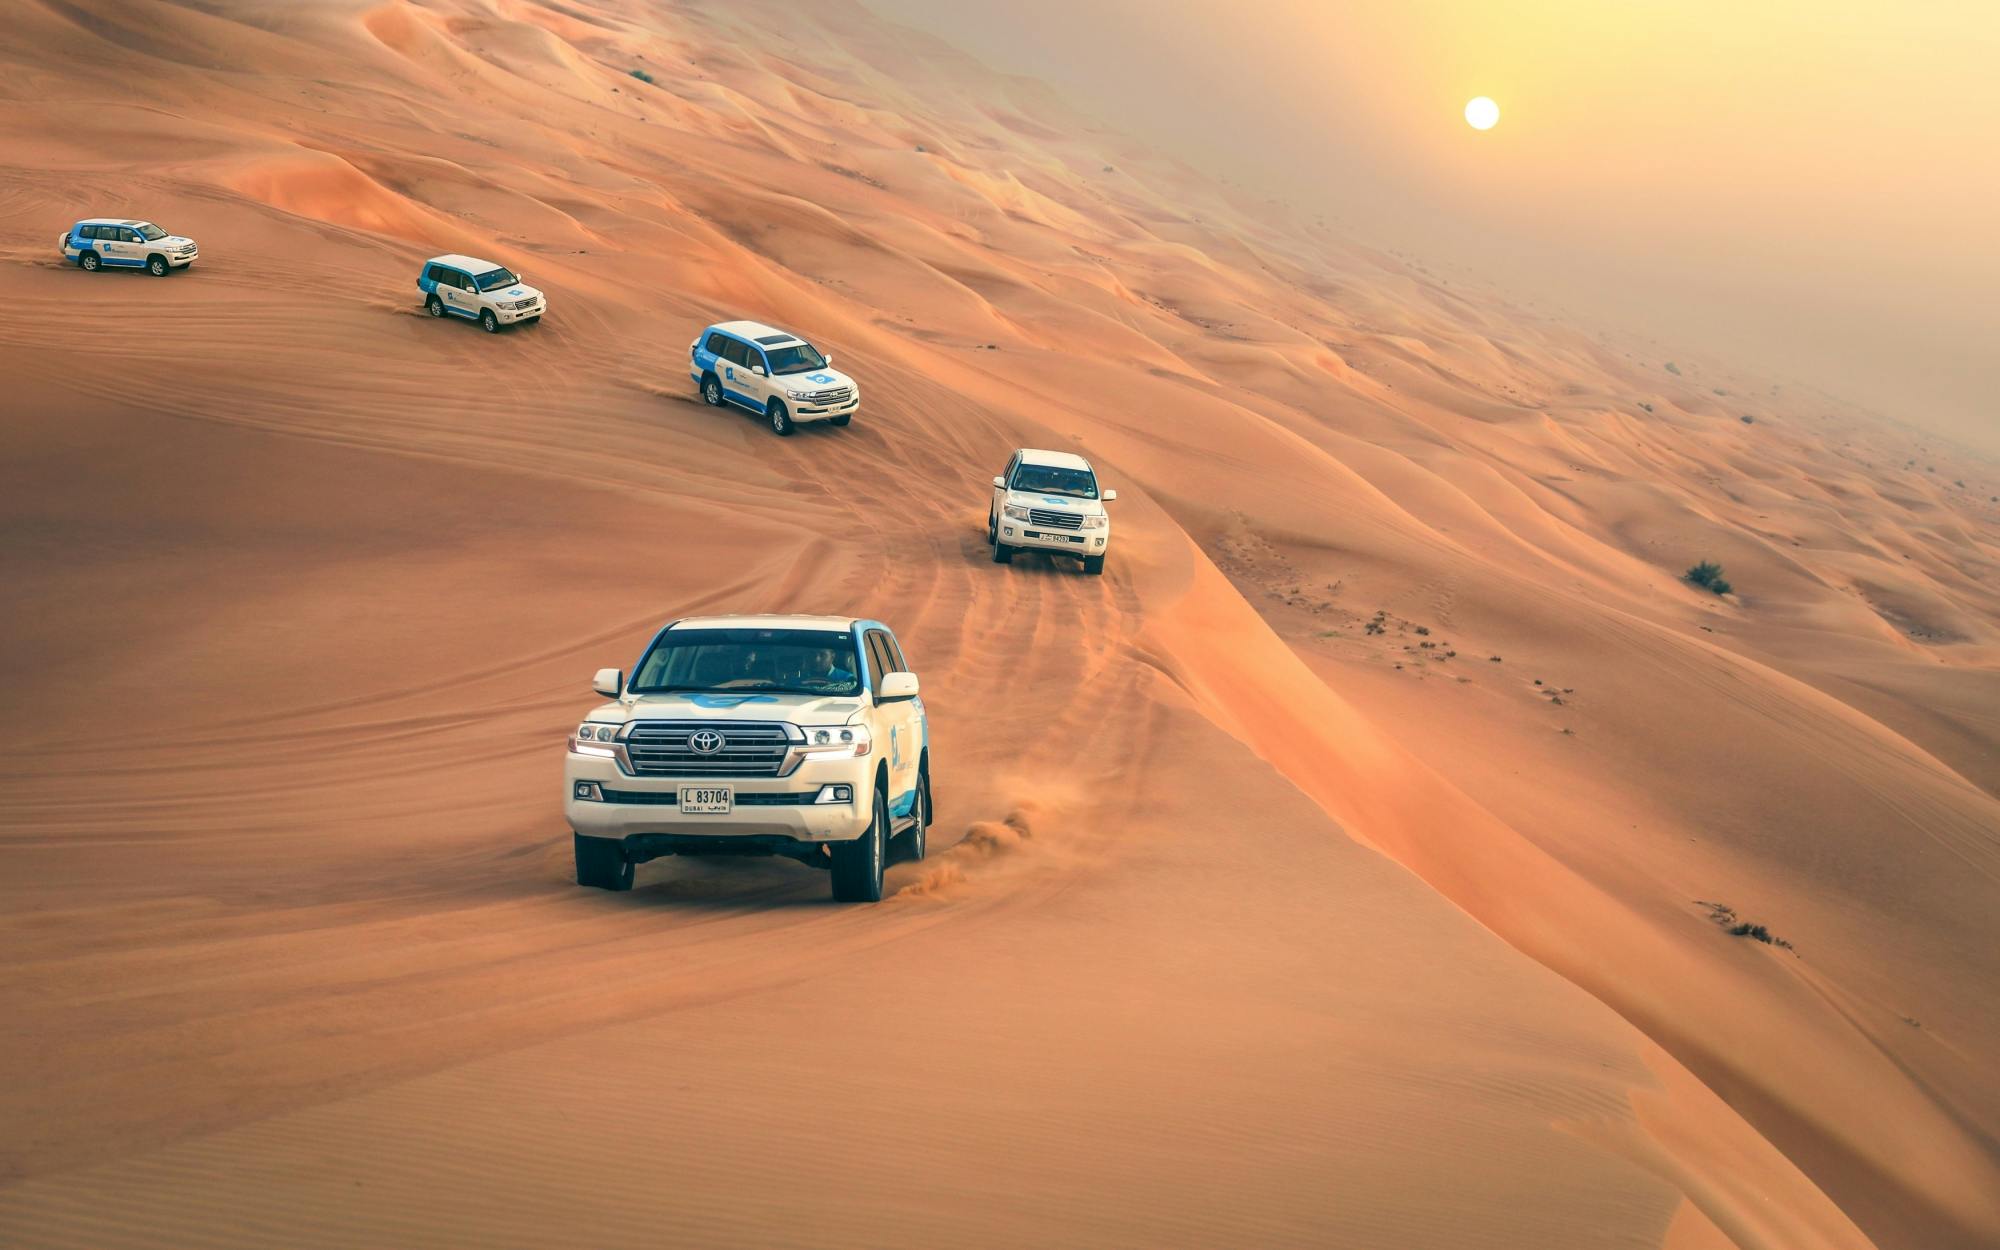 Safari dans le désert de Dubaï avec dune bashing, sandboard, dîner barbecue